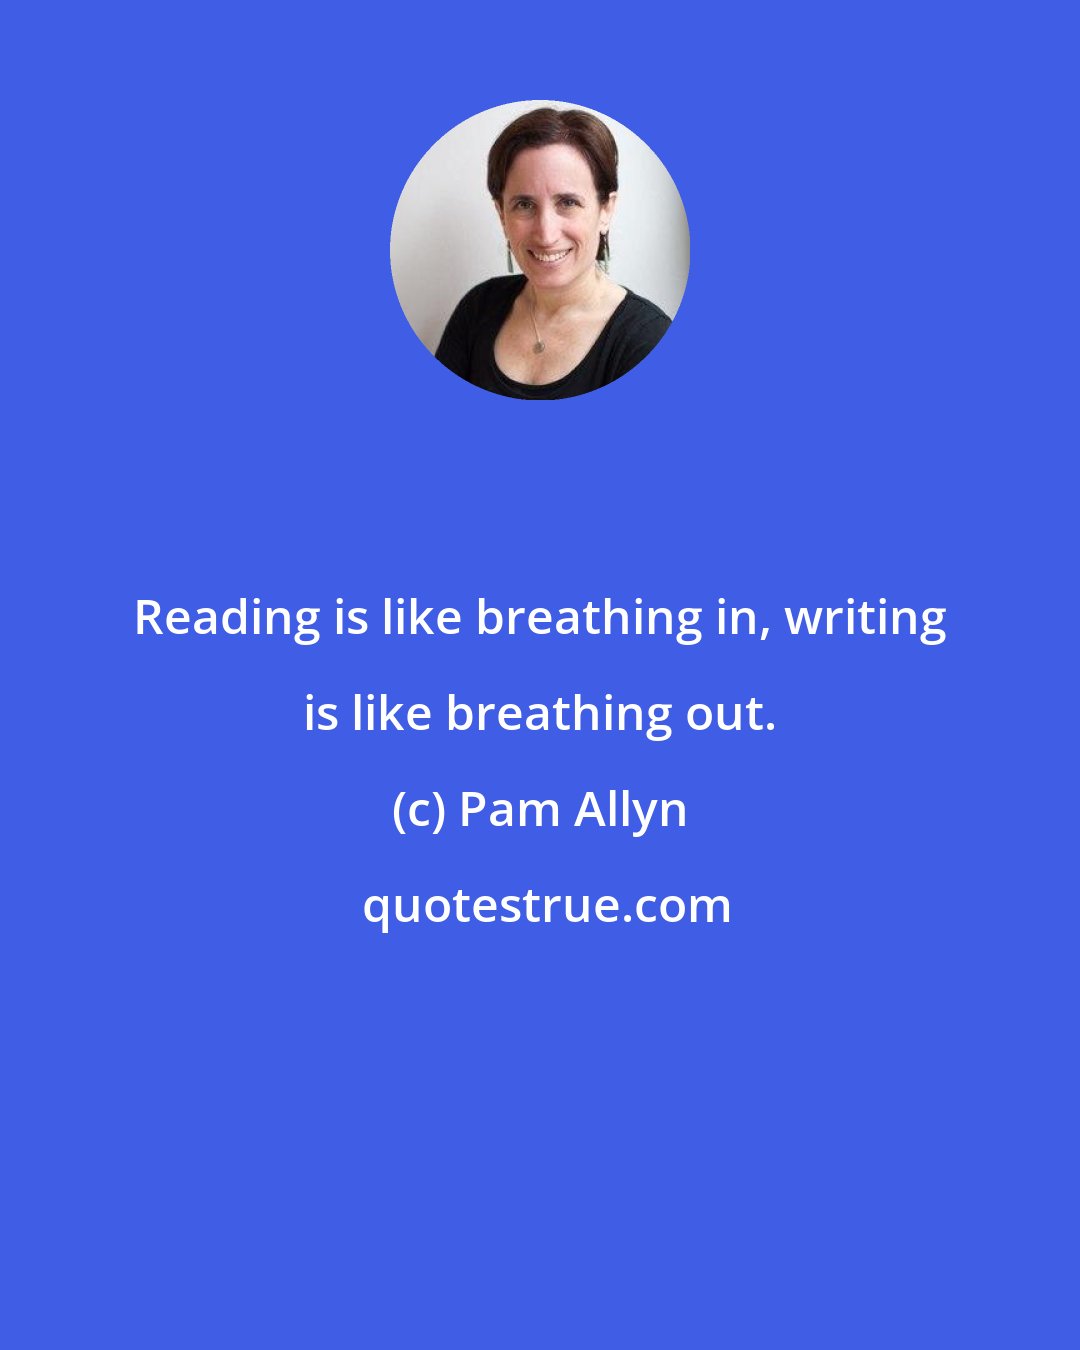 Pam Allyn: Reading is like breathing in, writing is like breathing out.